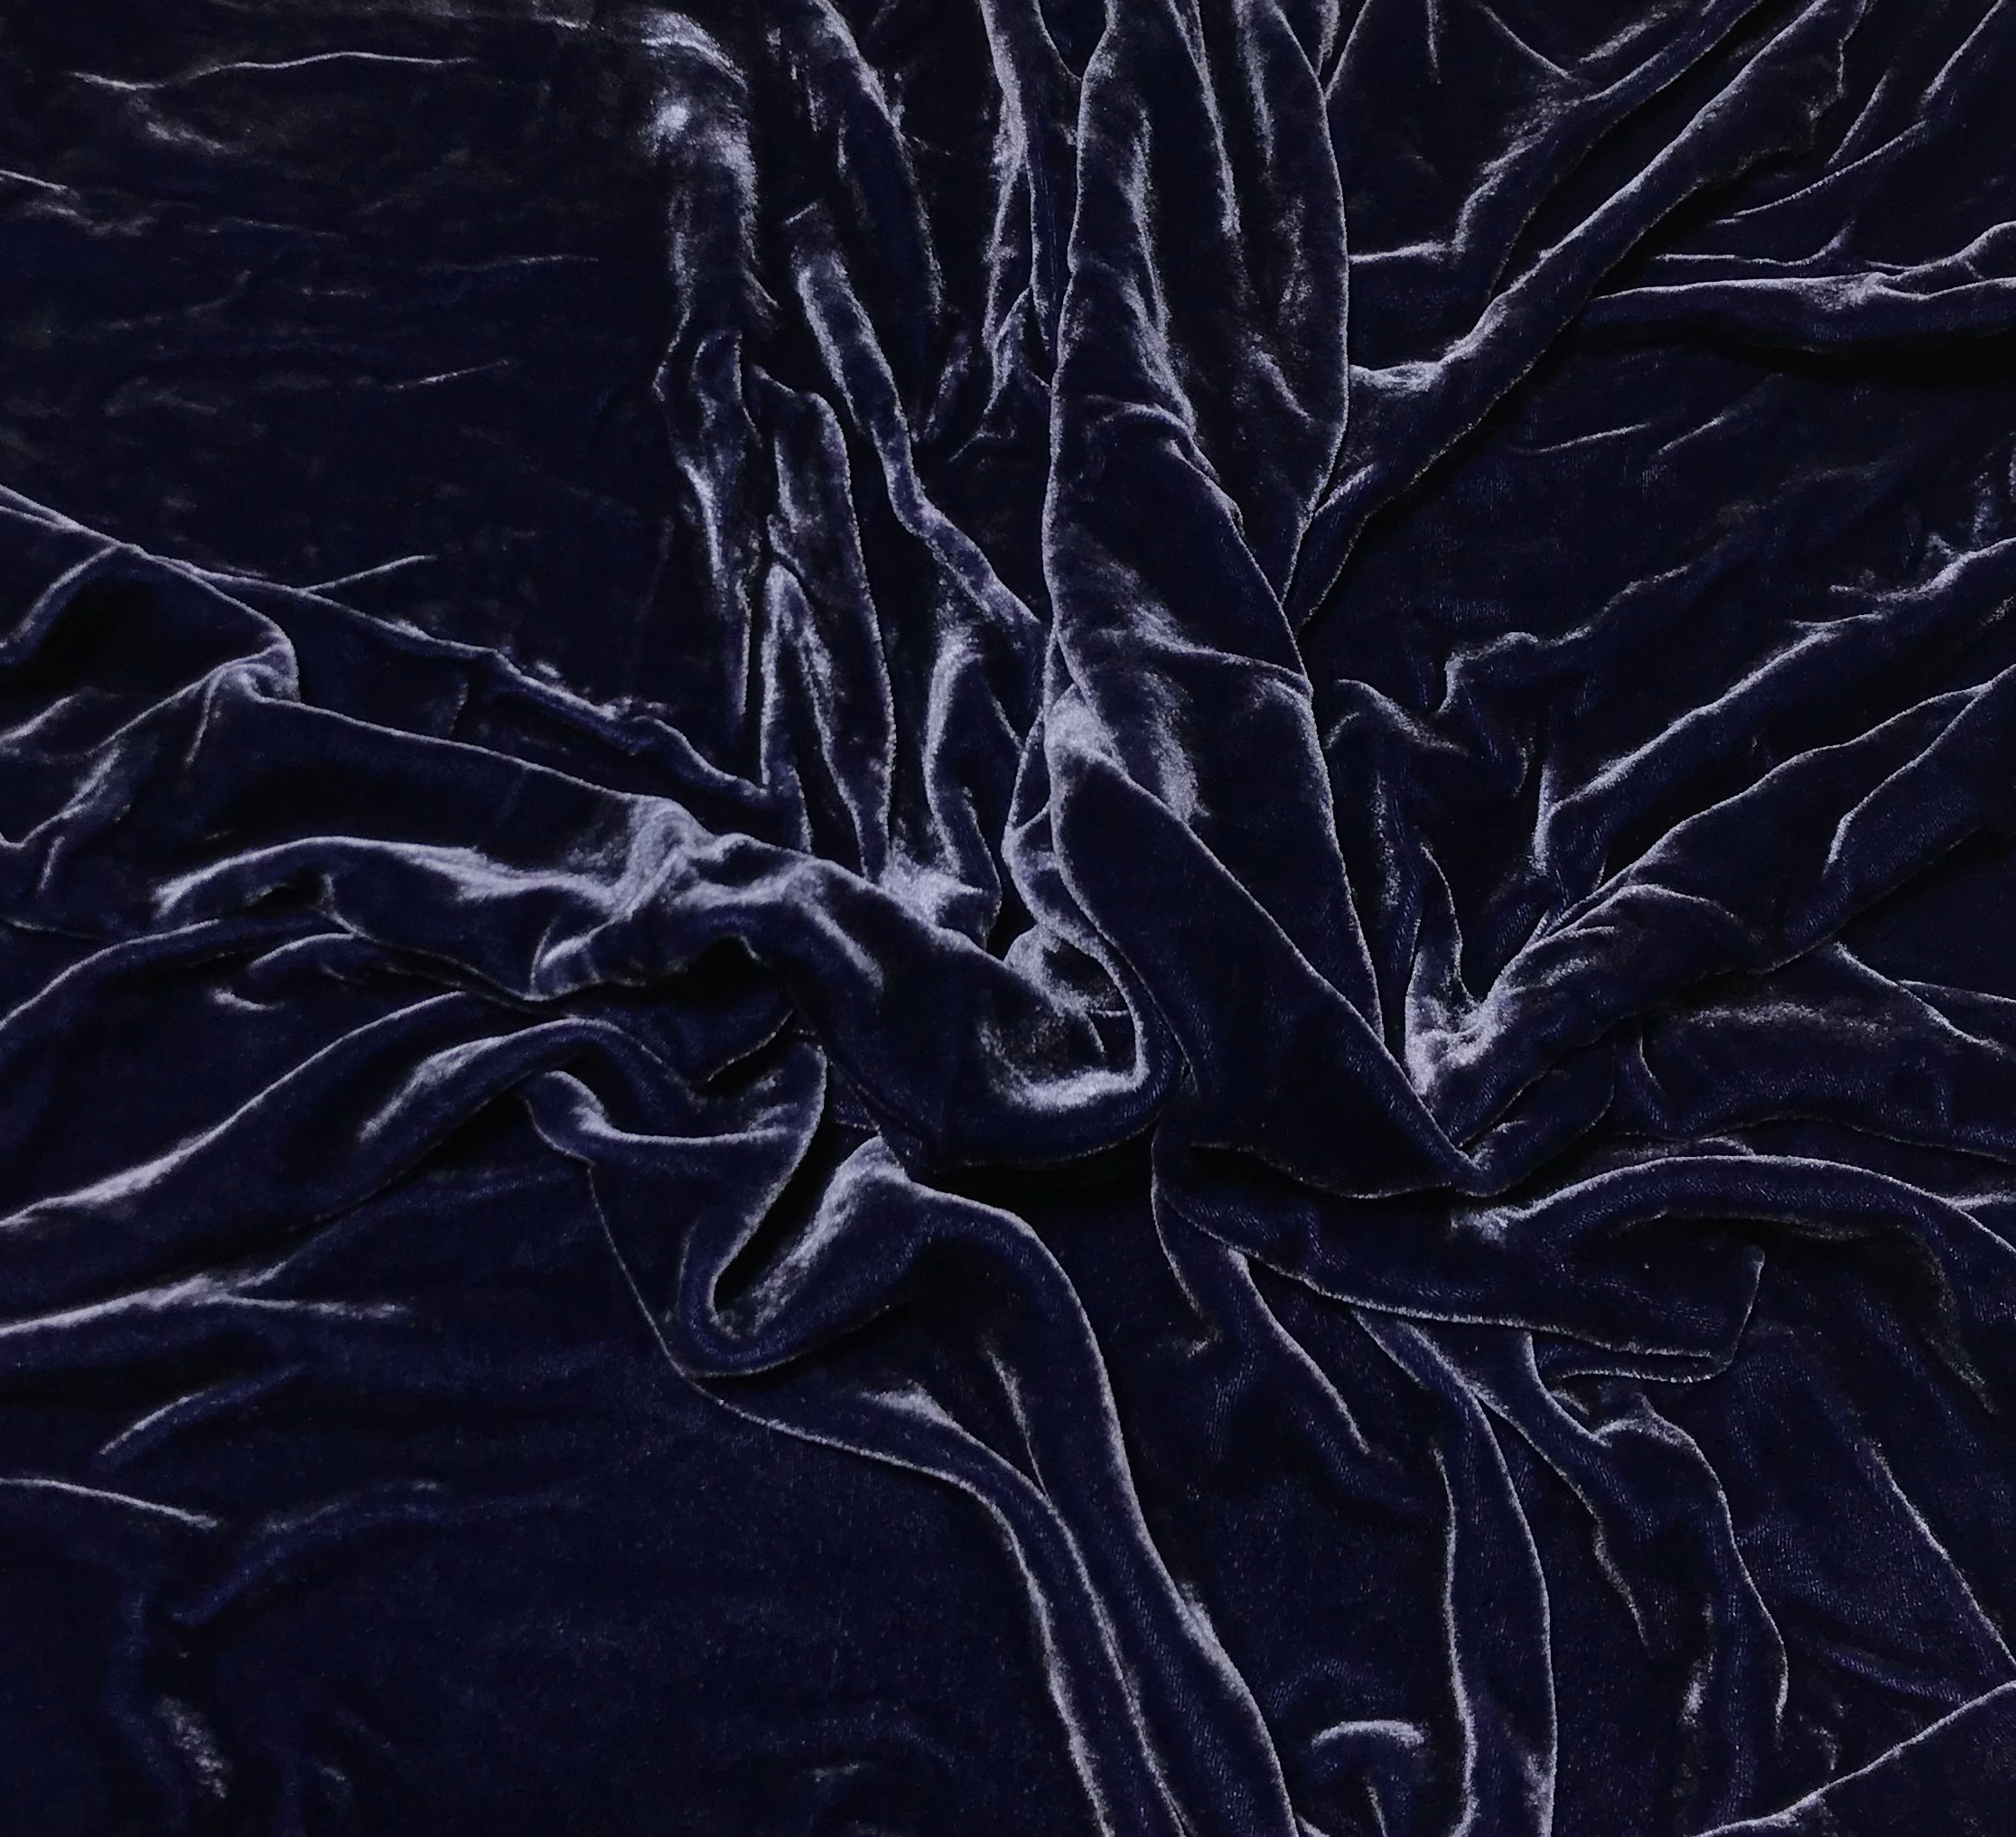 Dark Denim Blue Floral - Hand Dyed Burnout Silk Velvet